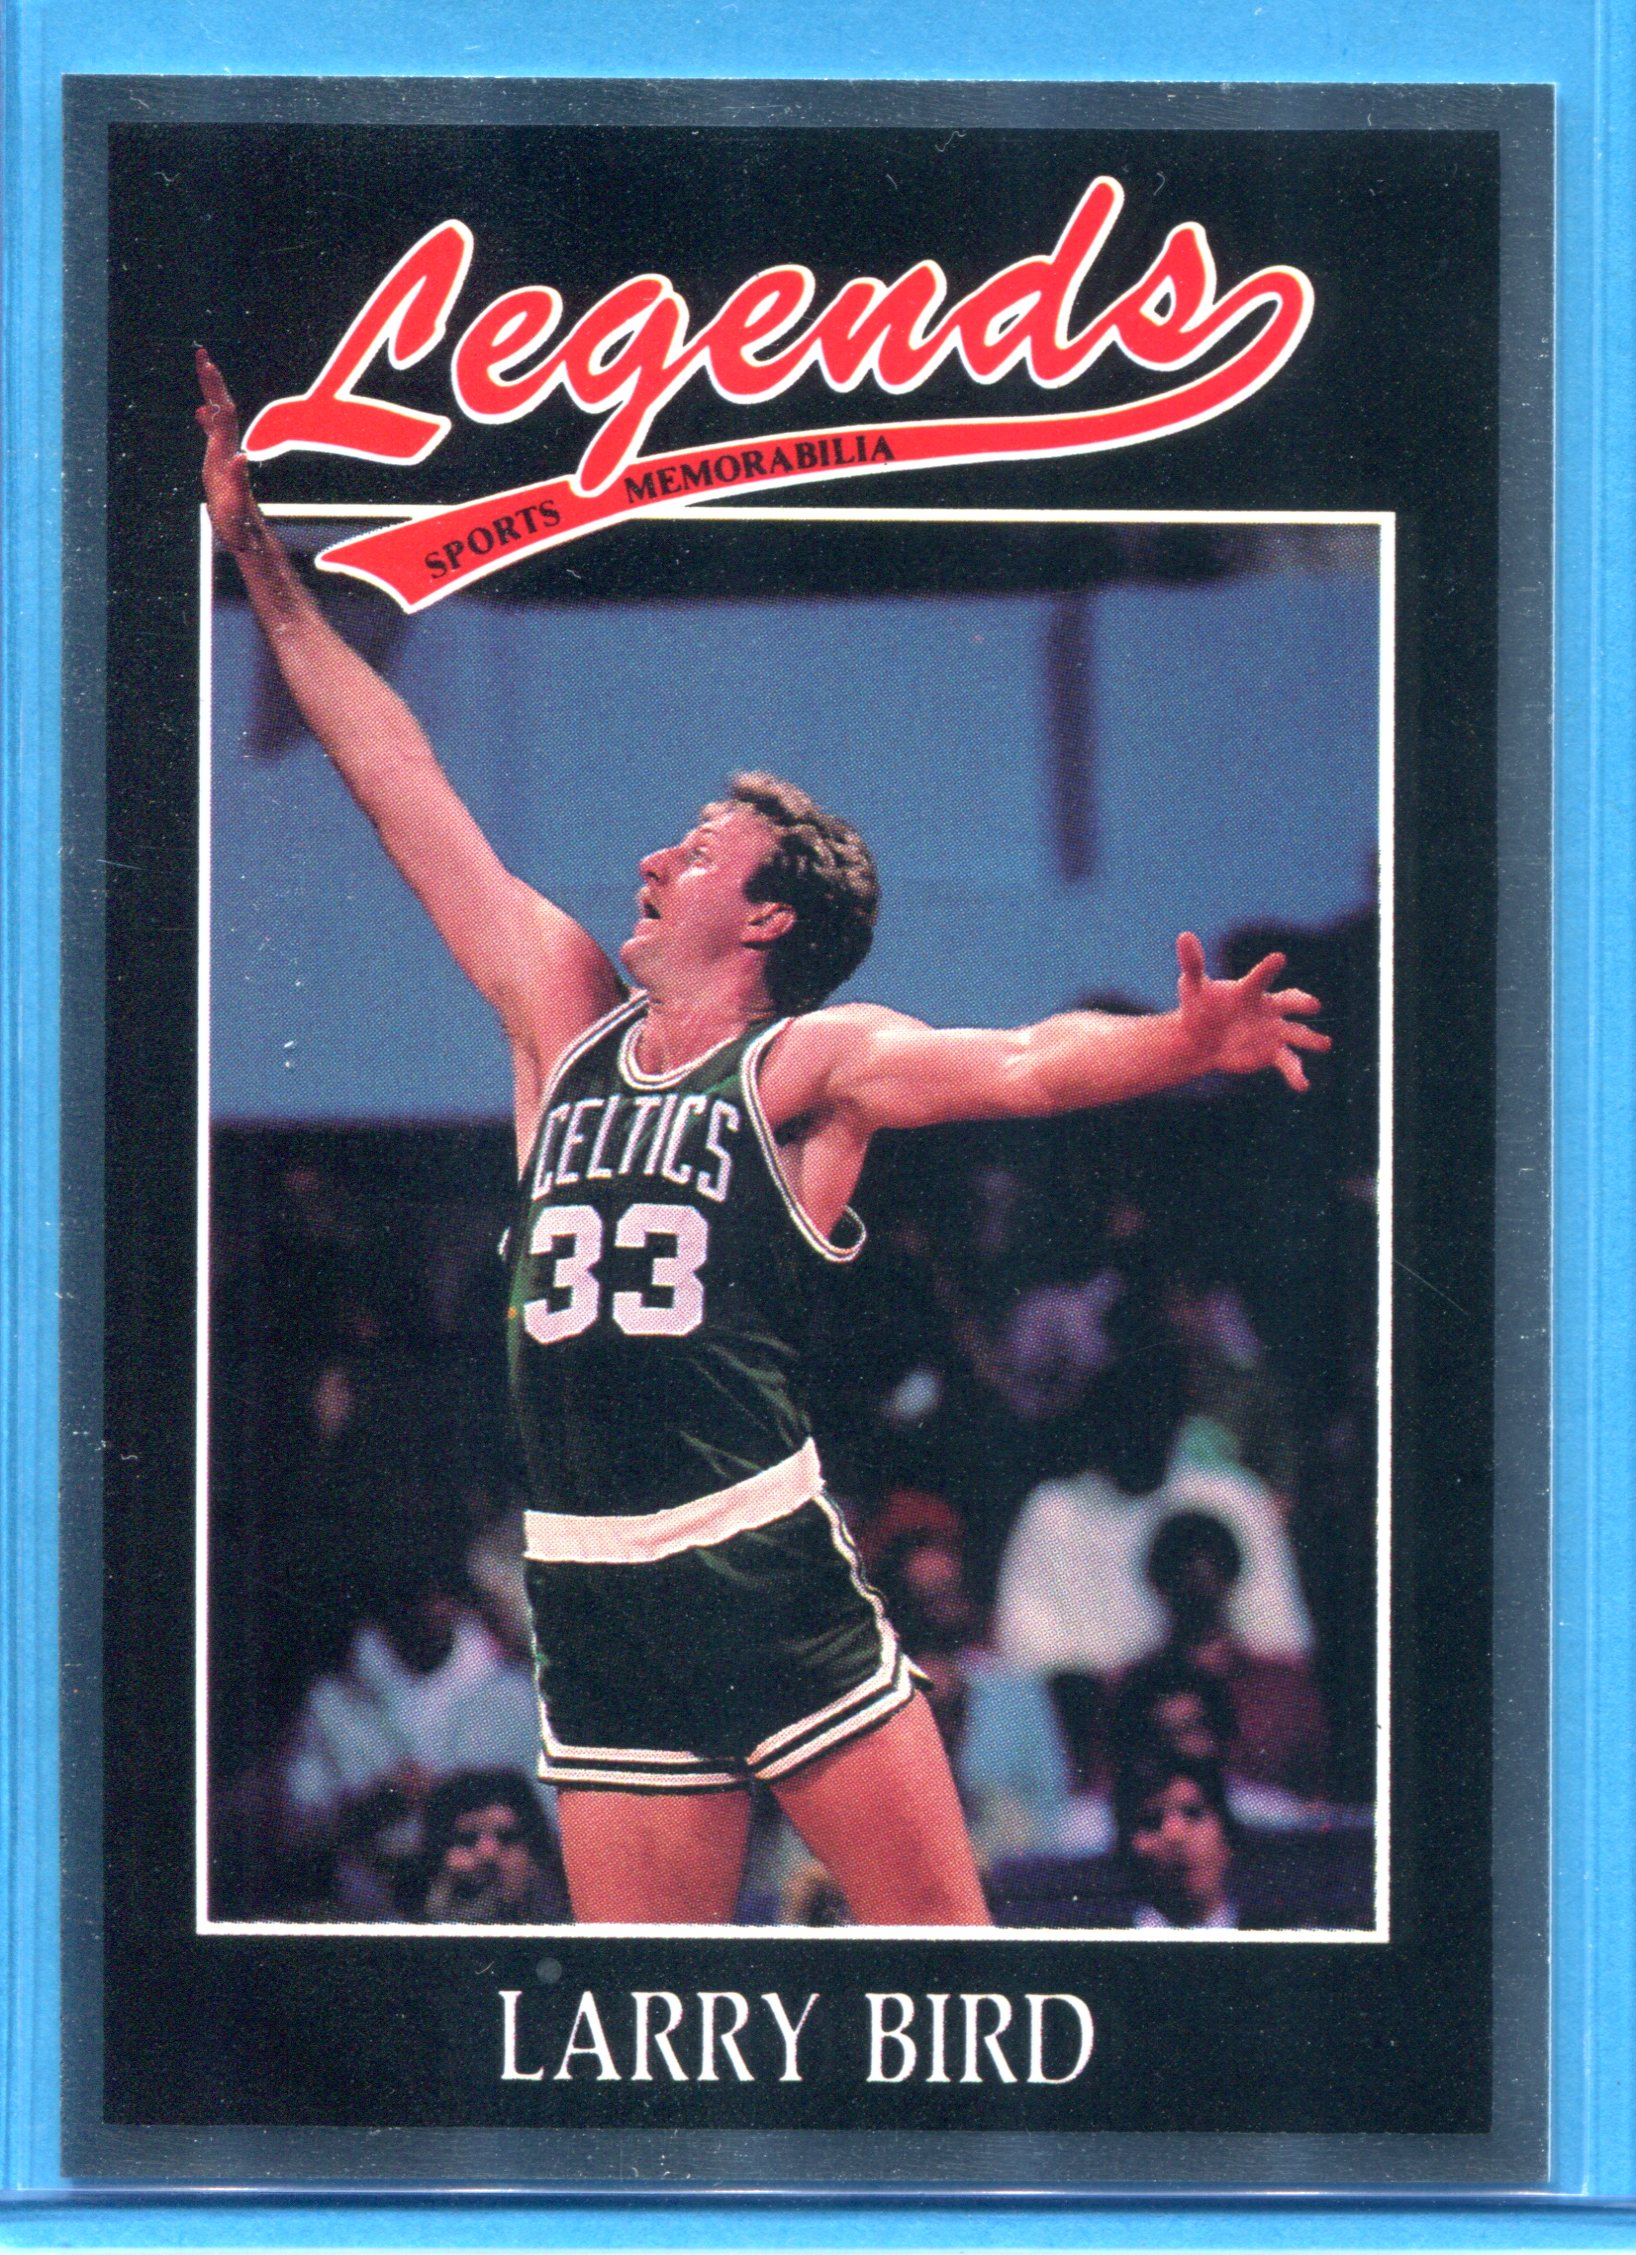 1991 Legends Silver Foil Card #52 Larry Bird